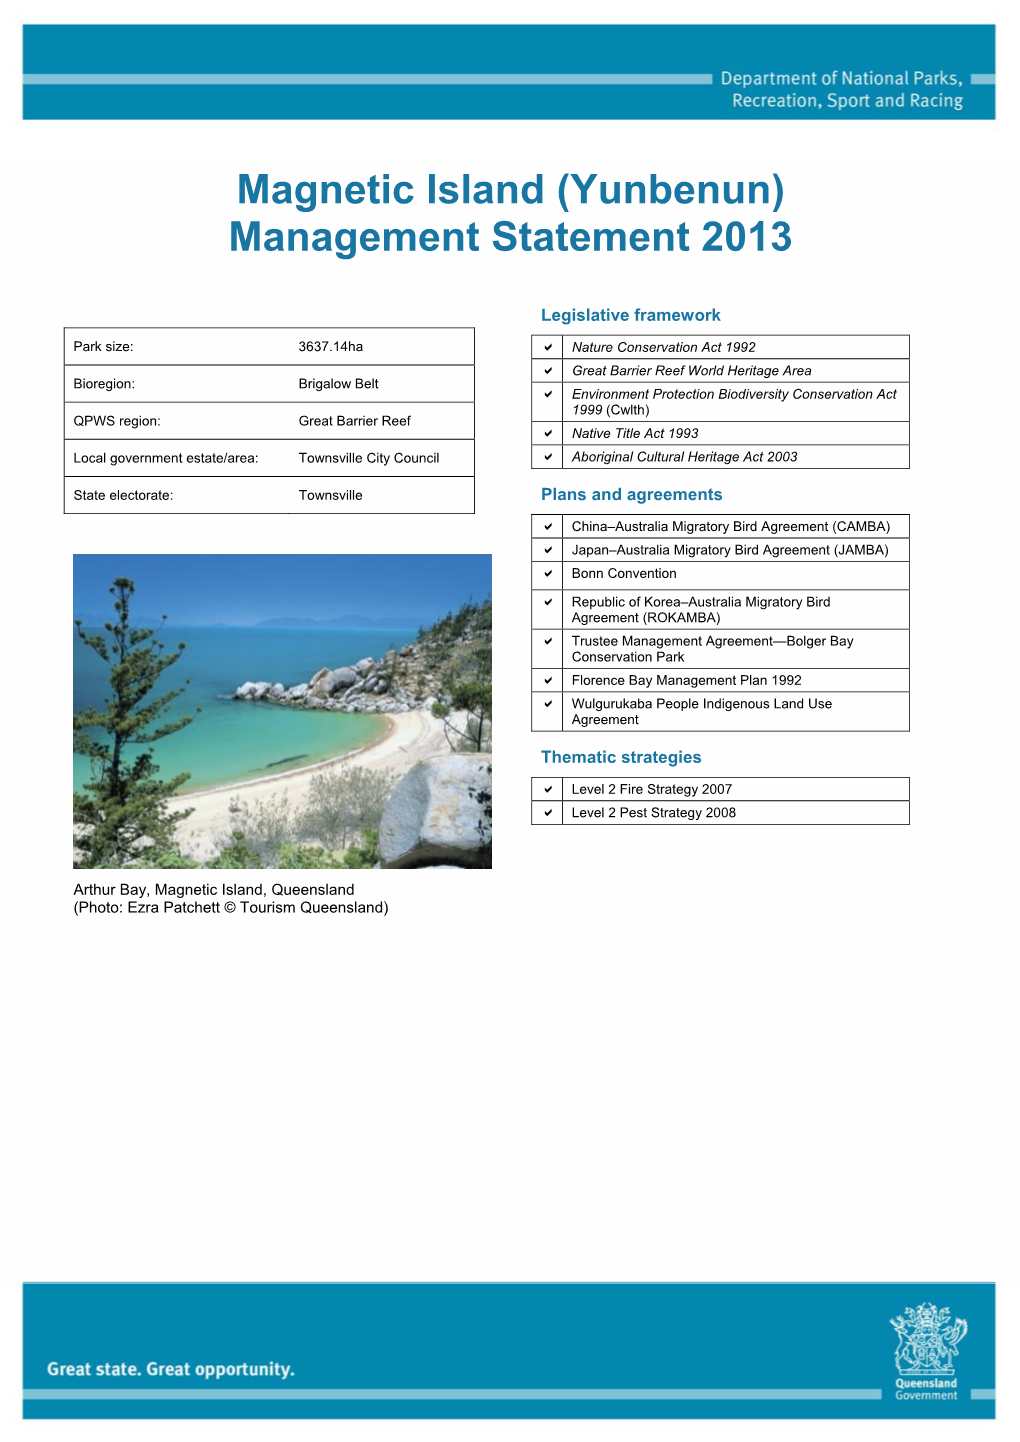 Magnetic Island (Yunbenun) Management Statement 2013